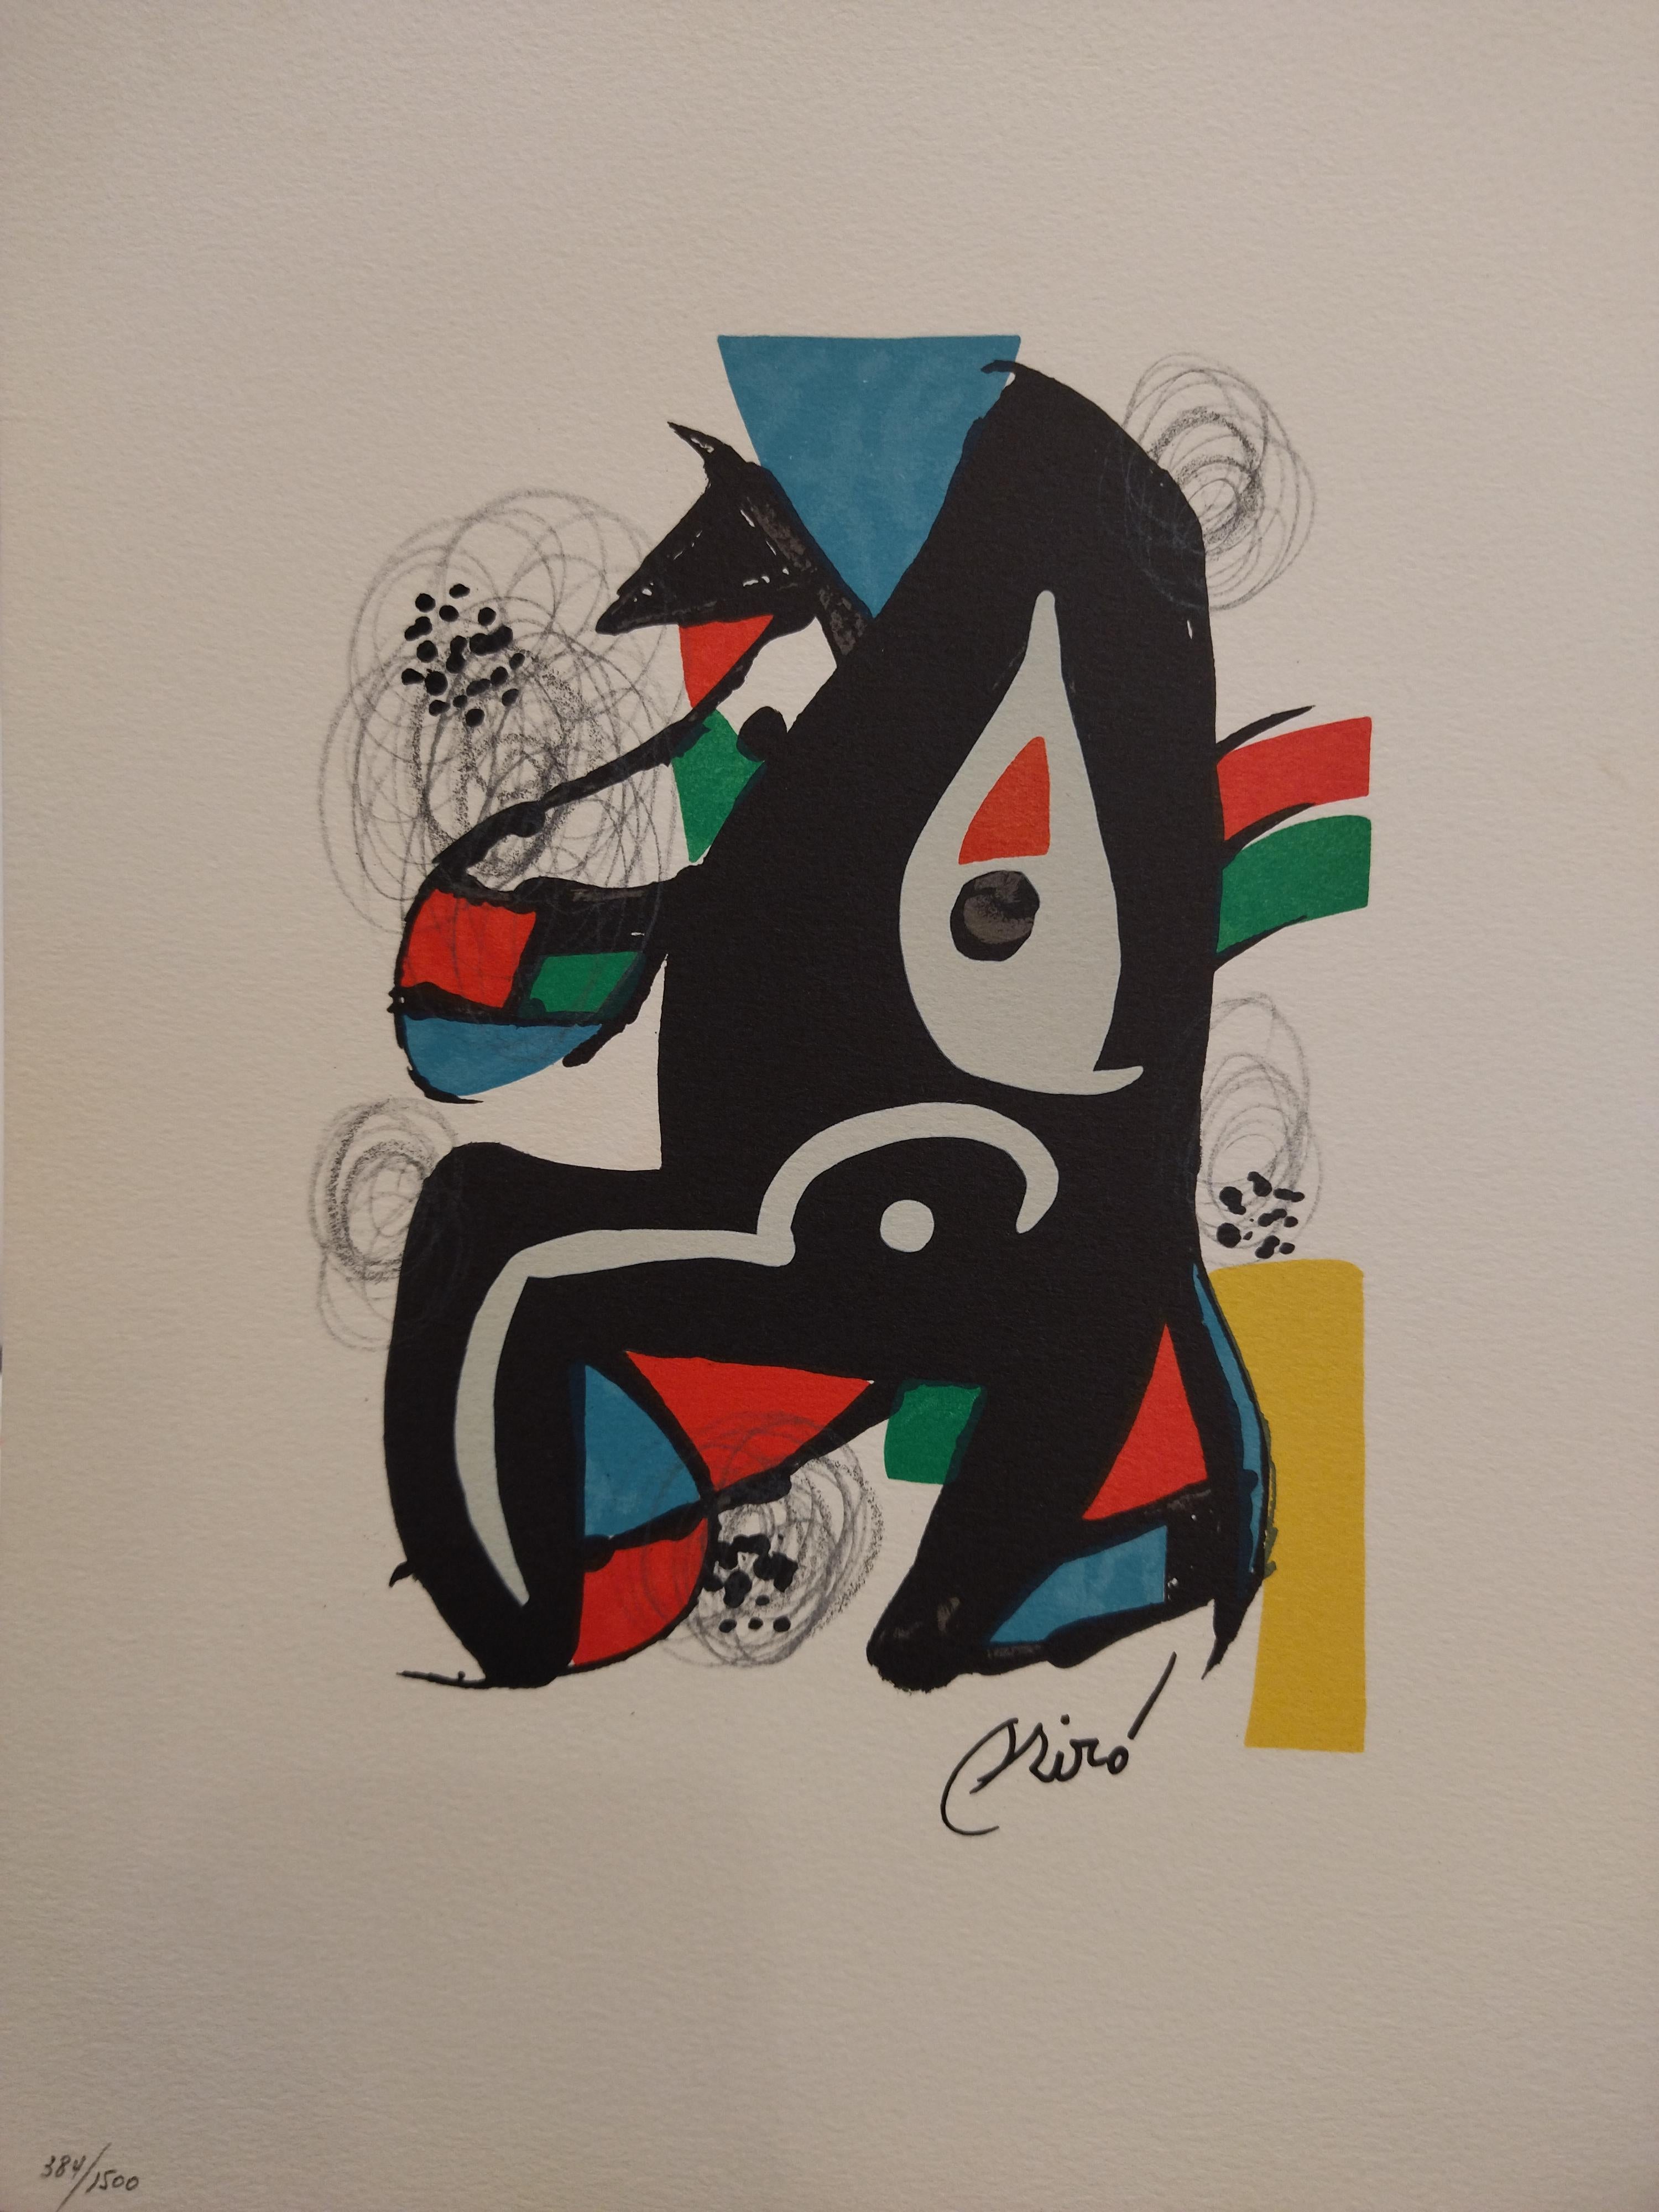 Miro    Little La melodie acide. original lithograph painting.  - Print by Joan Miró